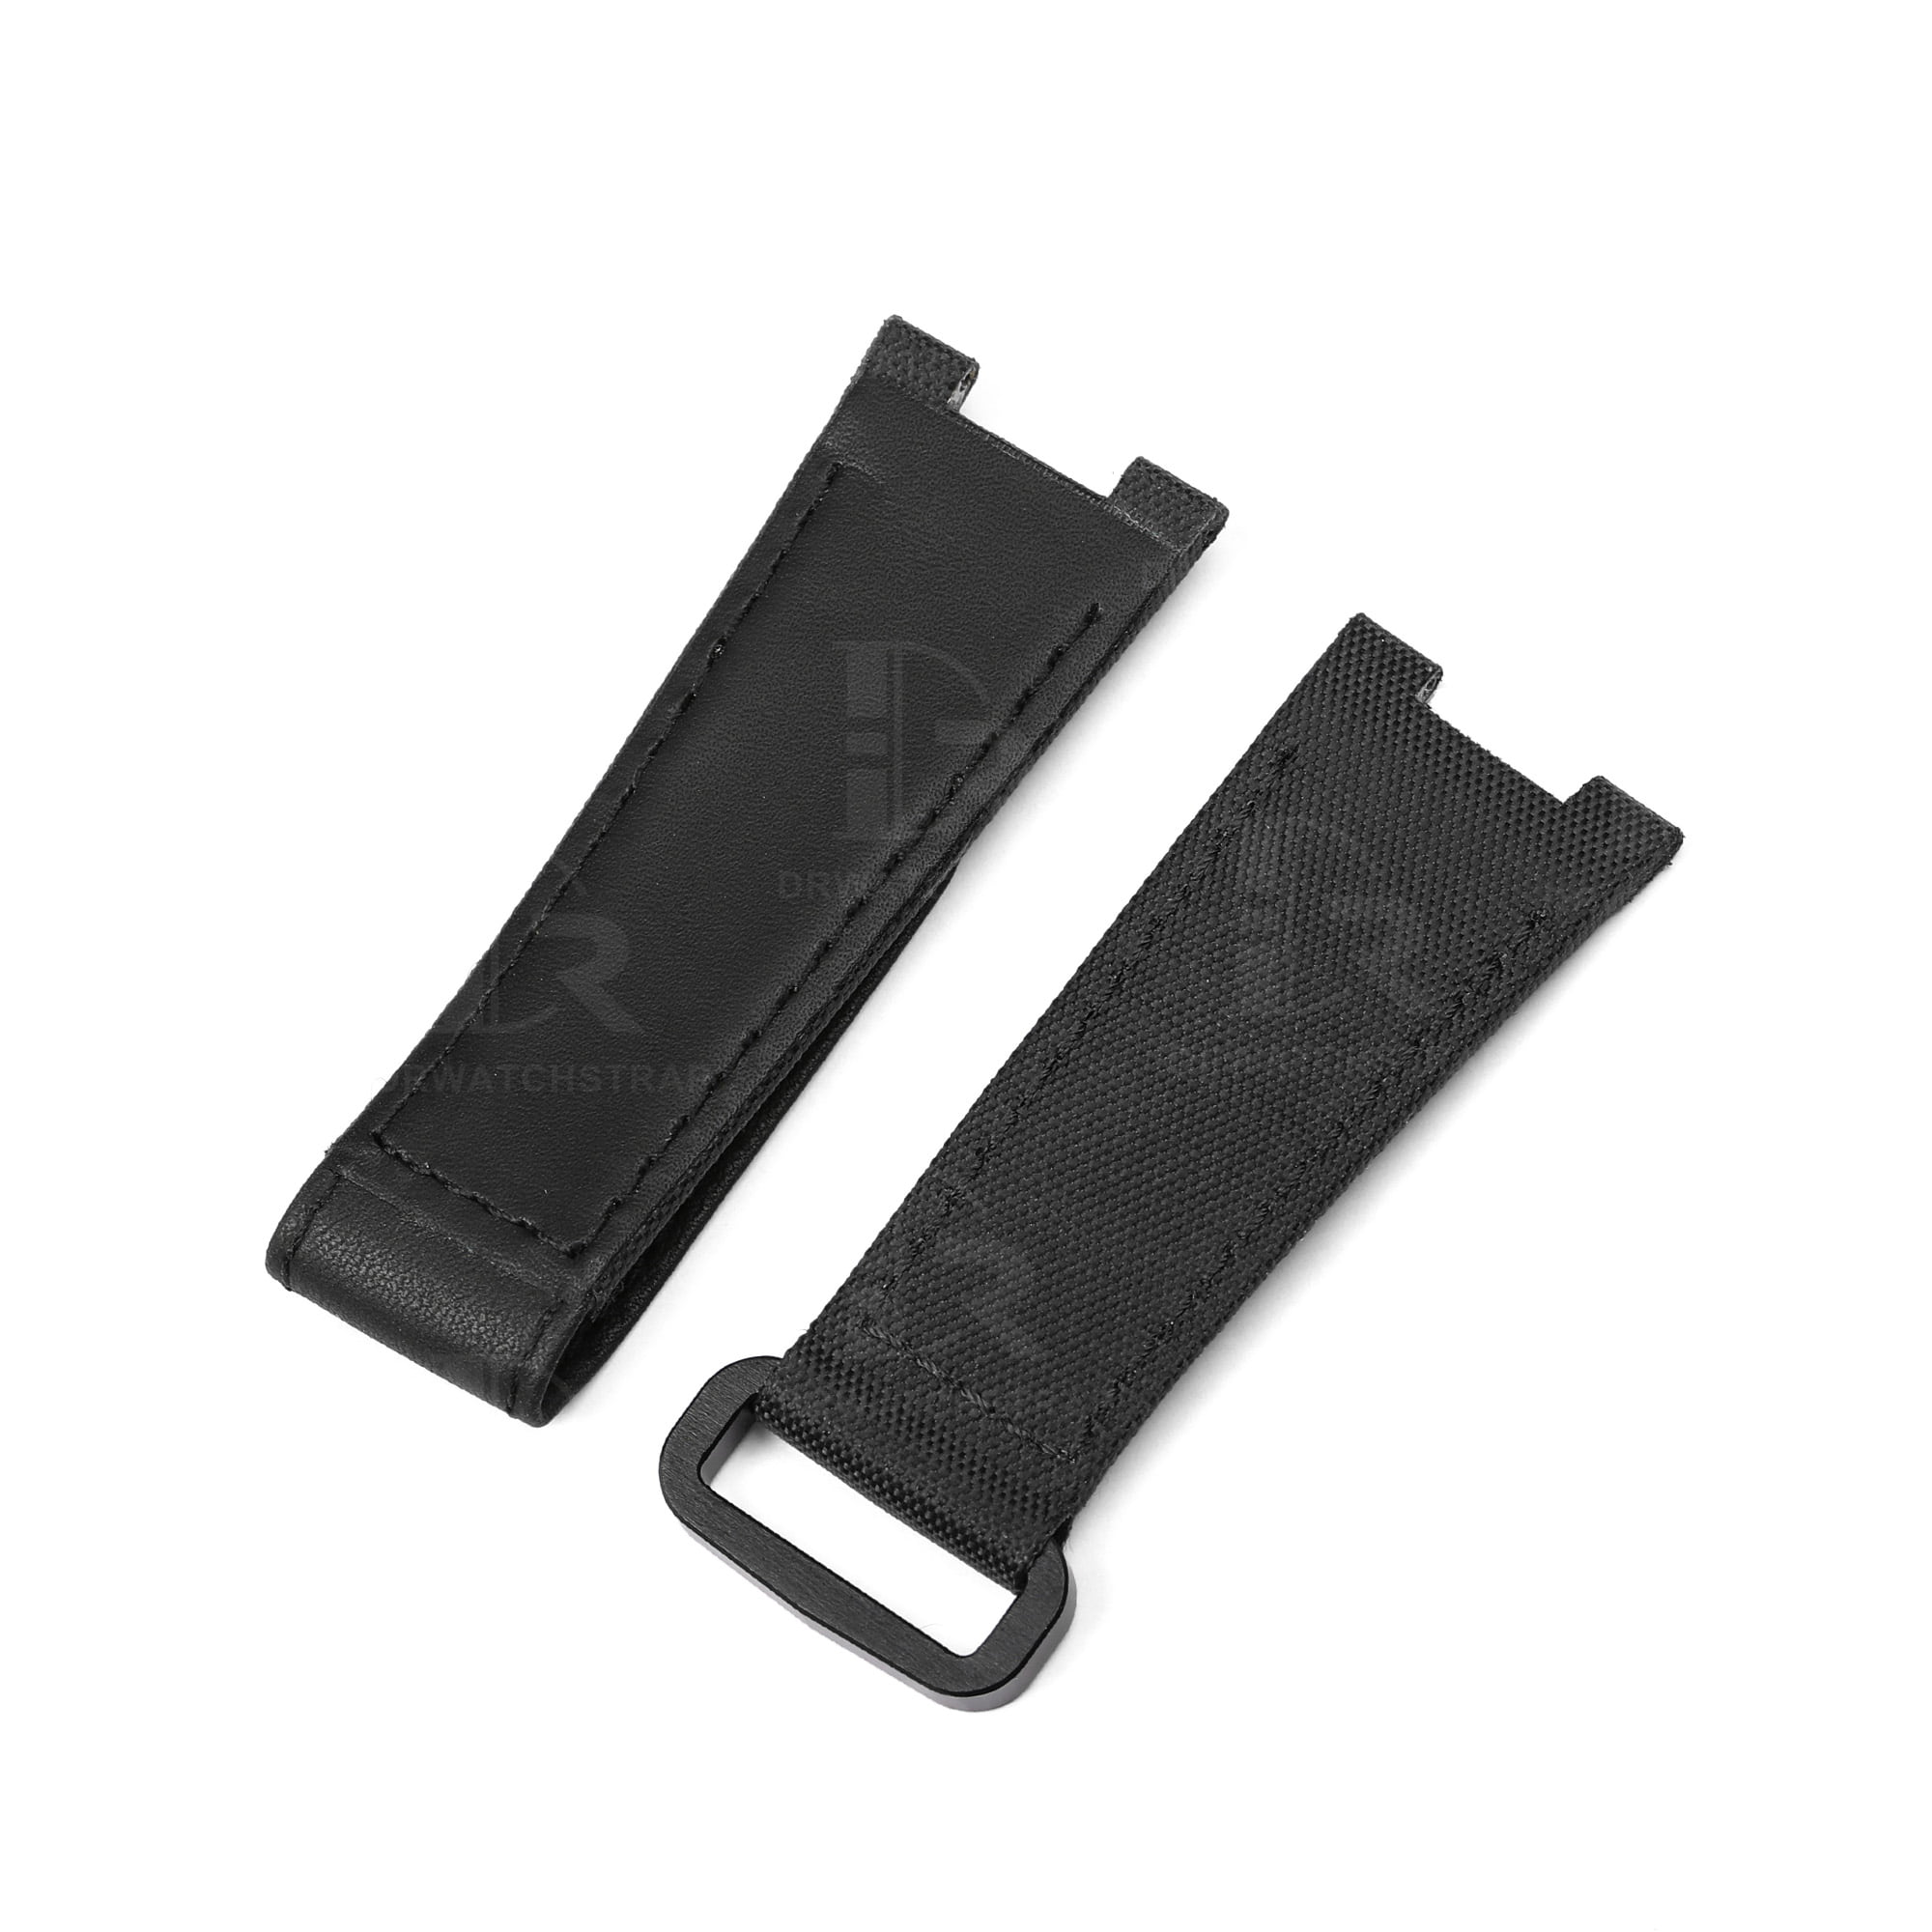 Buy Custom patek philippe nautilus 5711 Black Velcro straps Nylon for 5712 7010 Replacement for watchband (1)